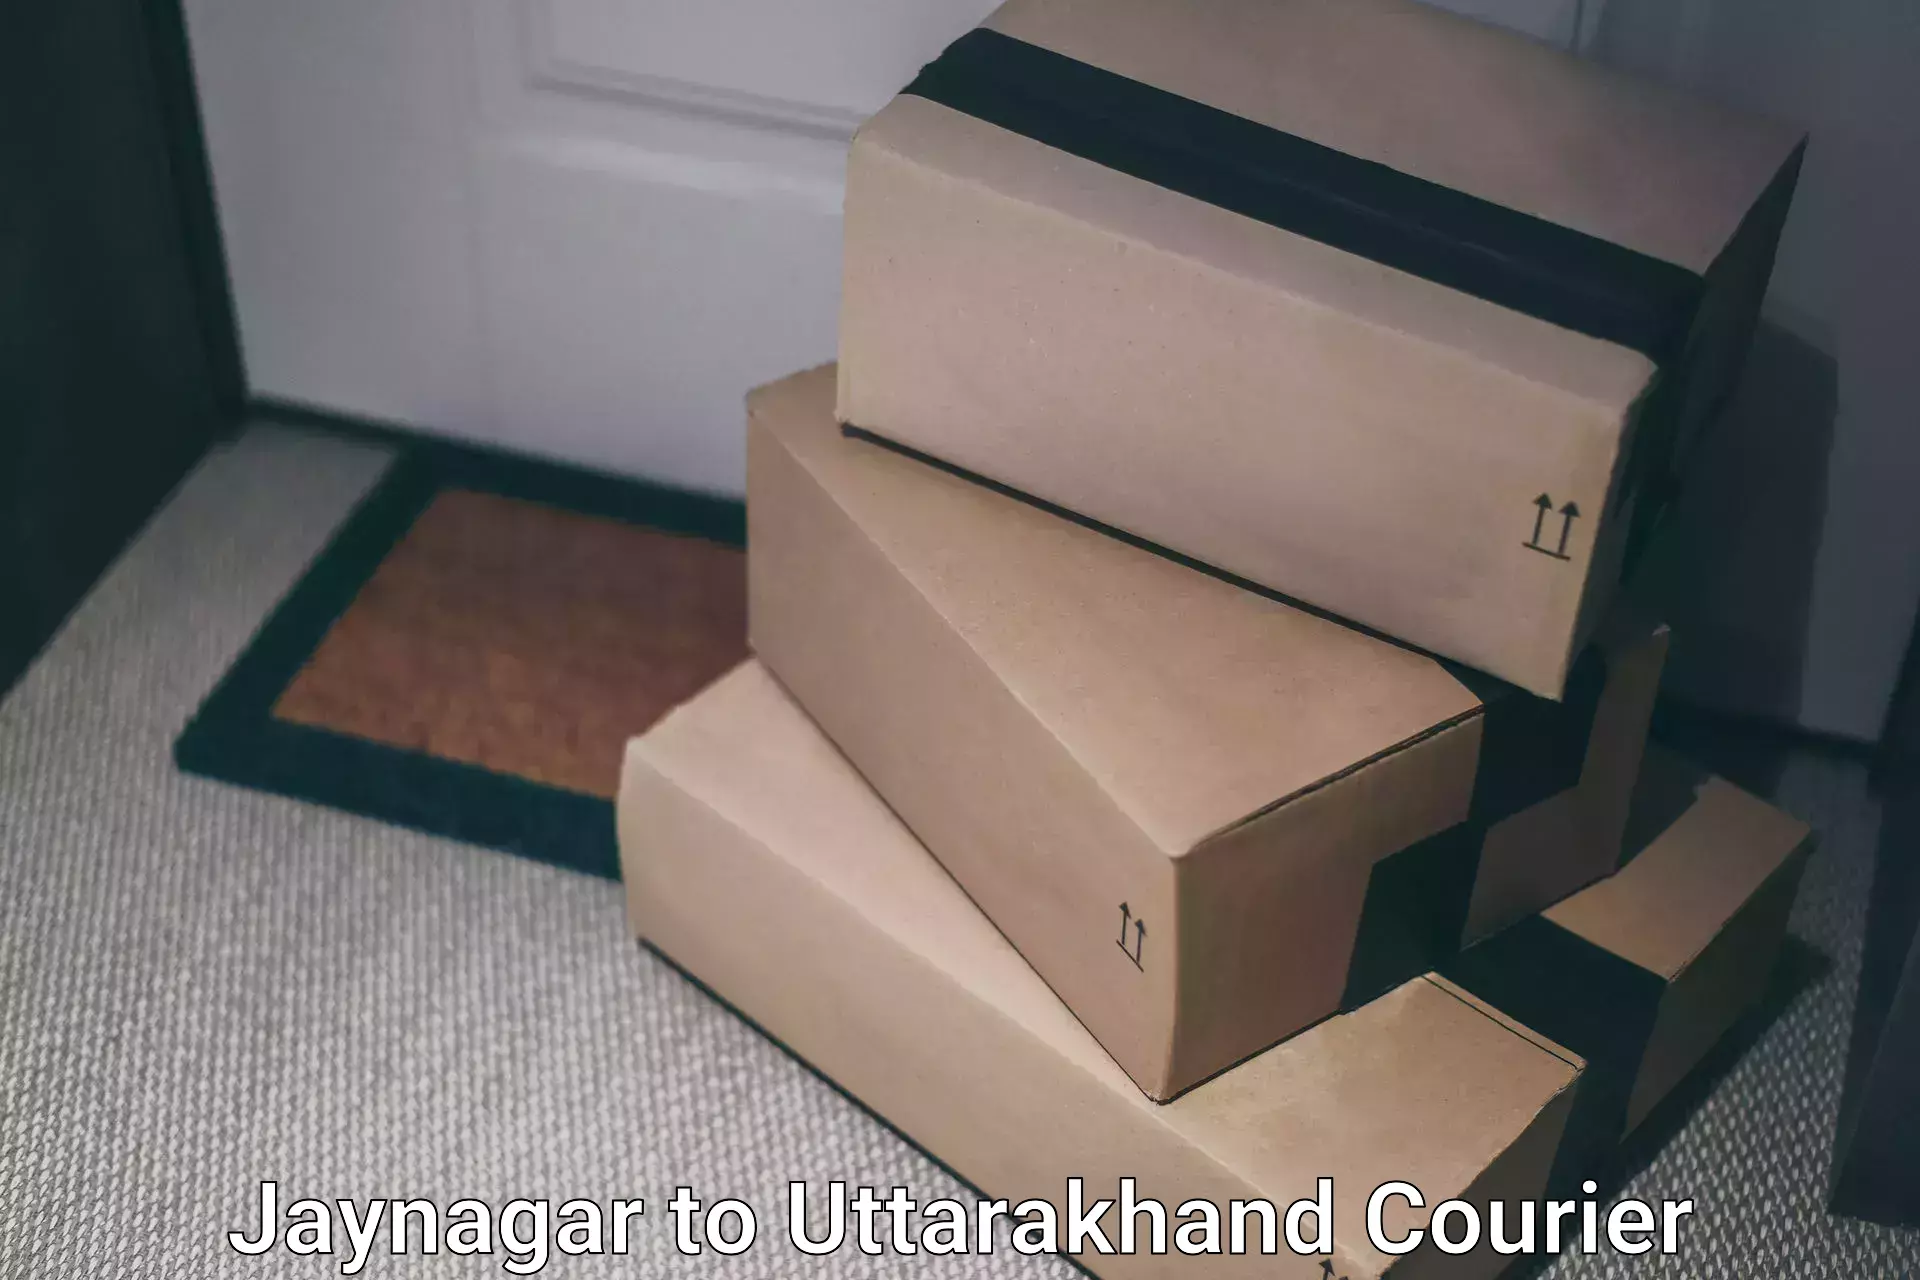 High-speed parcel service Jaynagar to Khatima